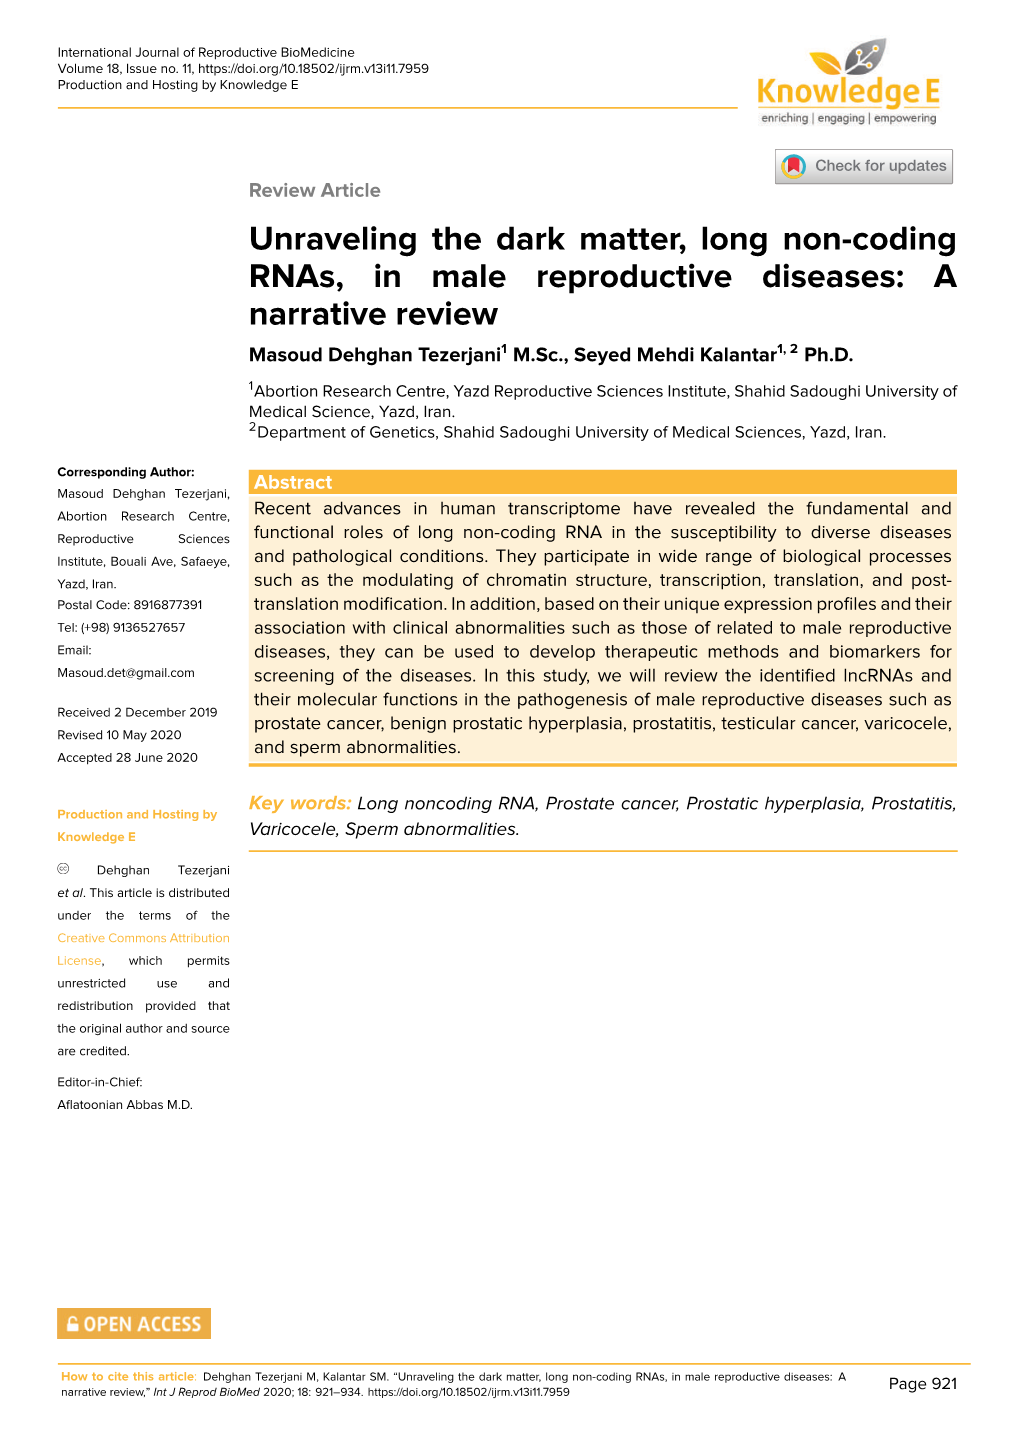 Unraveling the Dark Matter, Long Non-Coding Rnas, in Male Reproductive Diseases: a Narrative Review Masoud Dehghan Tezerjani1 M.Sc., Seyed Mehdi Kalantar1, 2 Ph.D